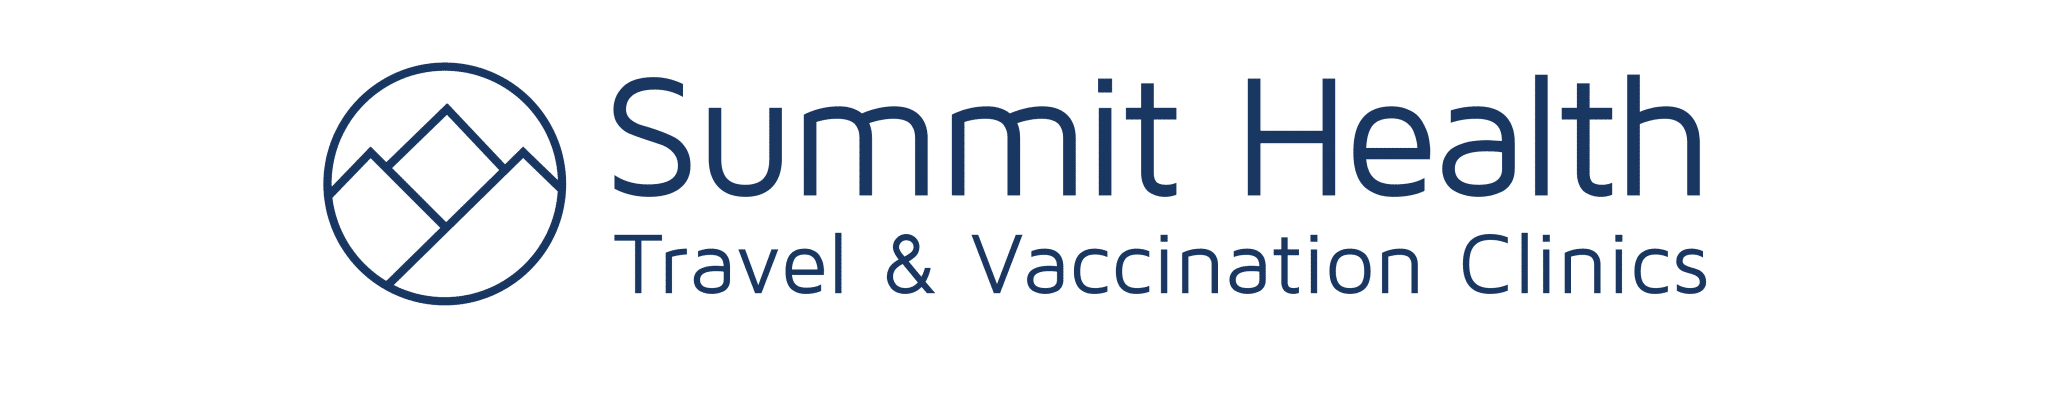 Summit Health – Travel & Vaccination Clinics